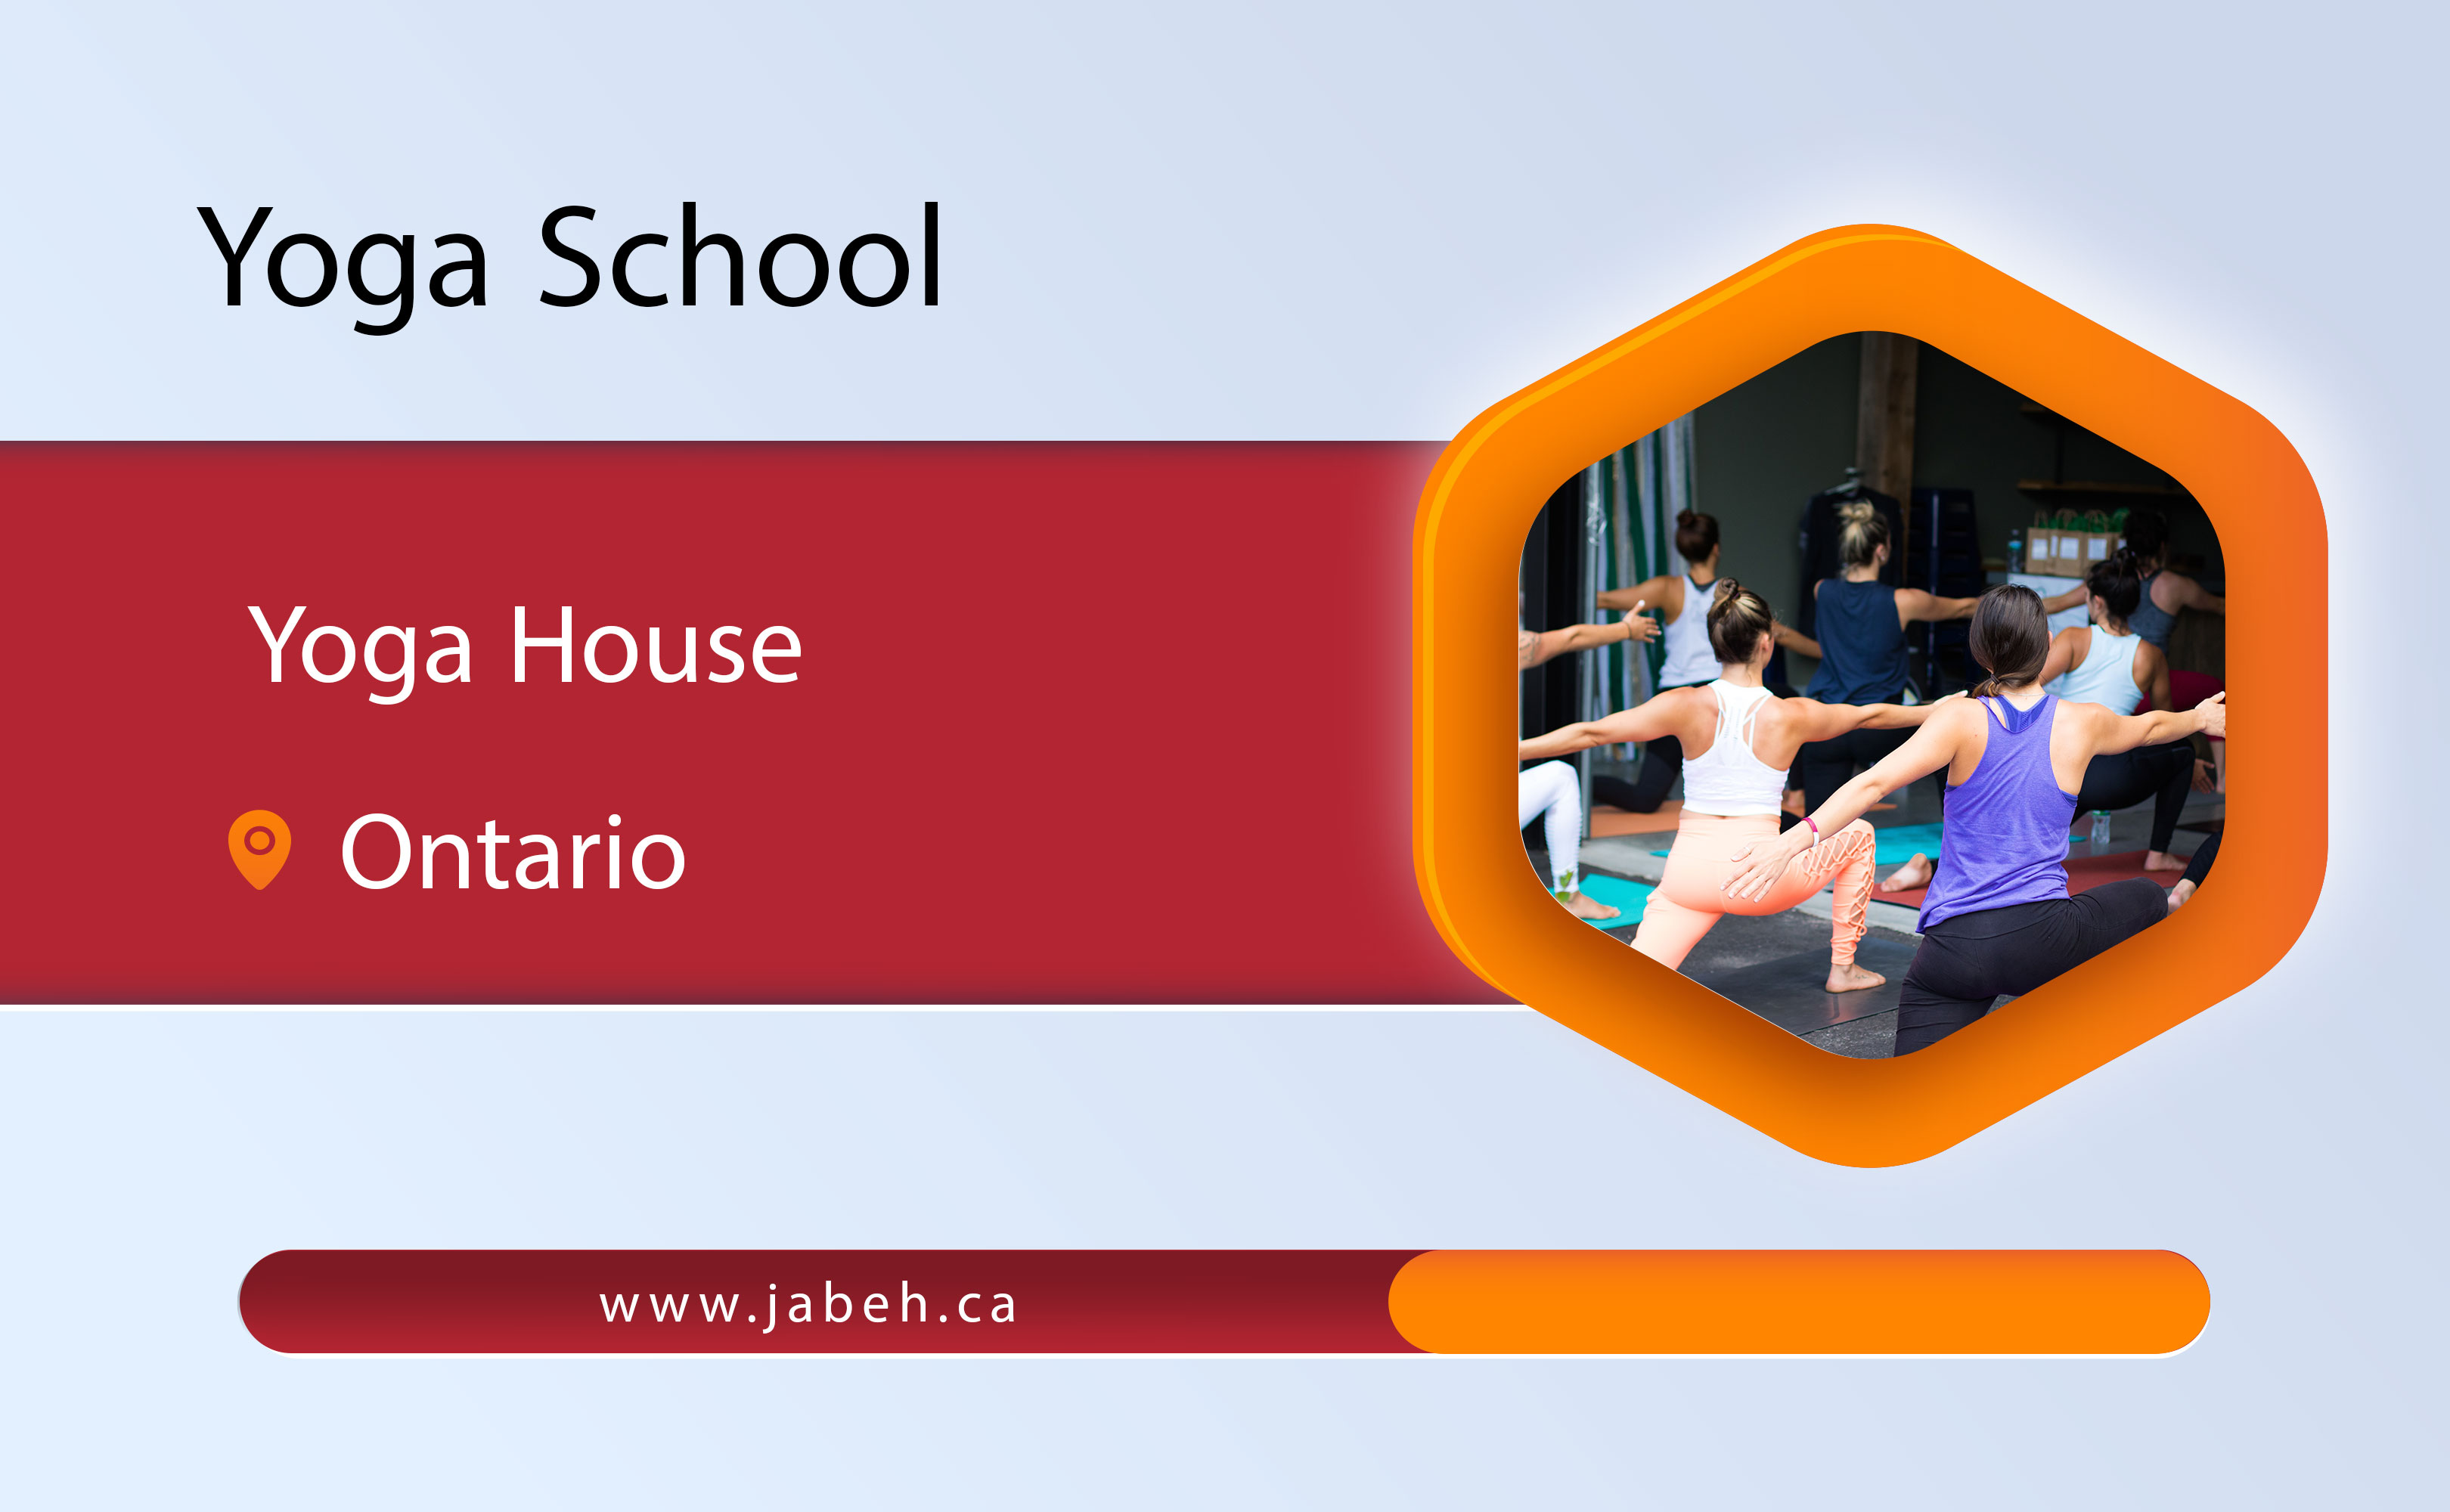 Yoga House School in Ontario